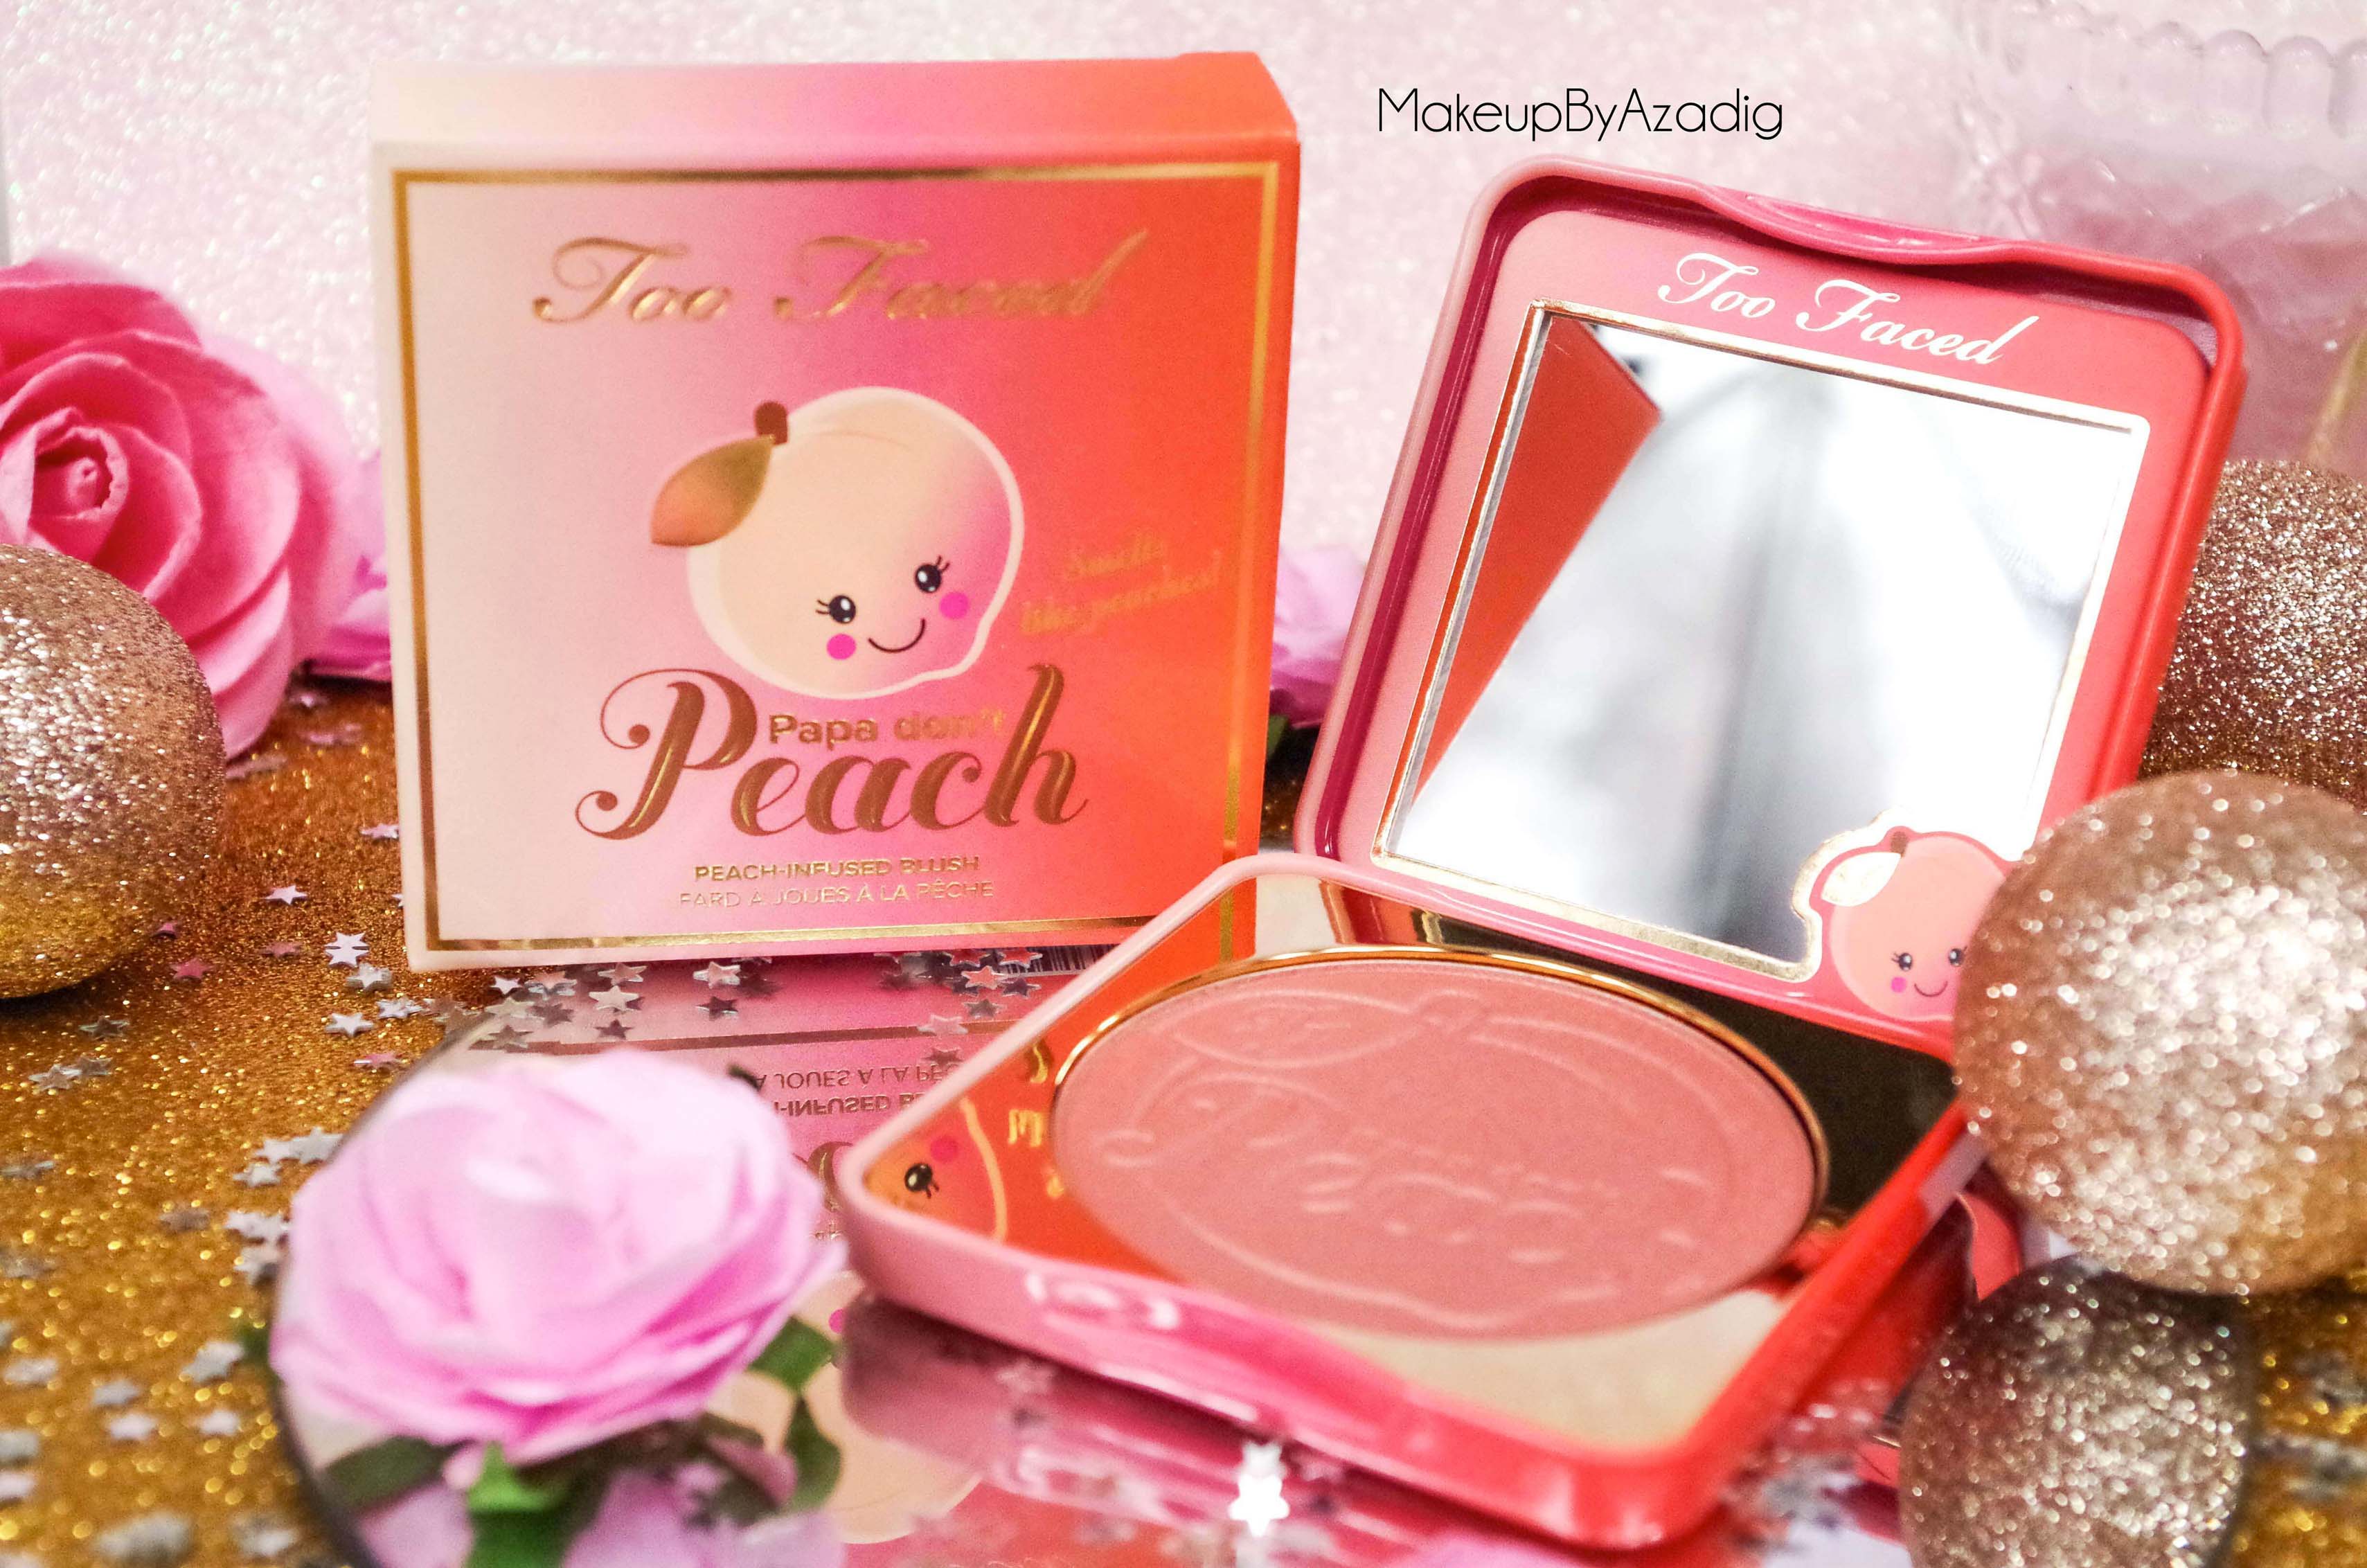 review-nouveau-blush-papa-dont-peach-too-faced-sephora-ete-printemps-paris-sweet-peach-swatch-avis-makeupbyazadig-florida-2